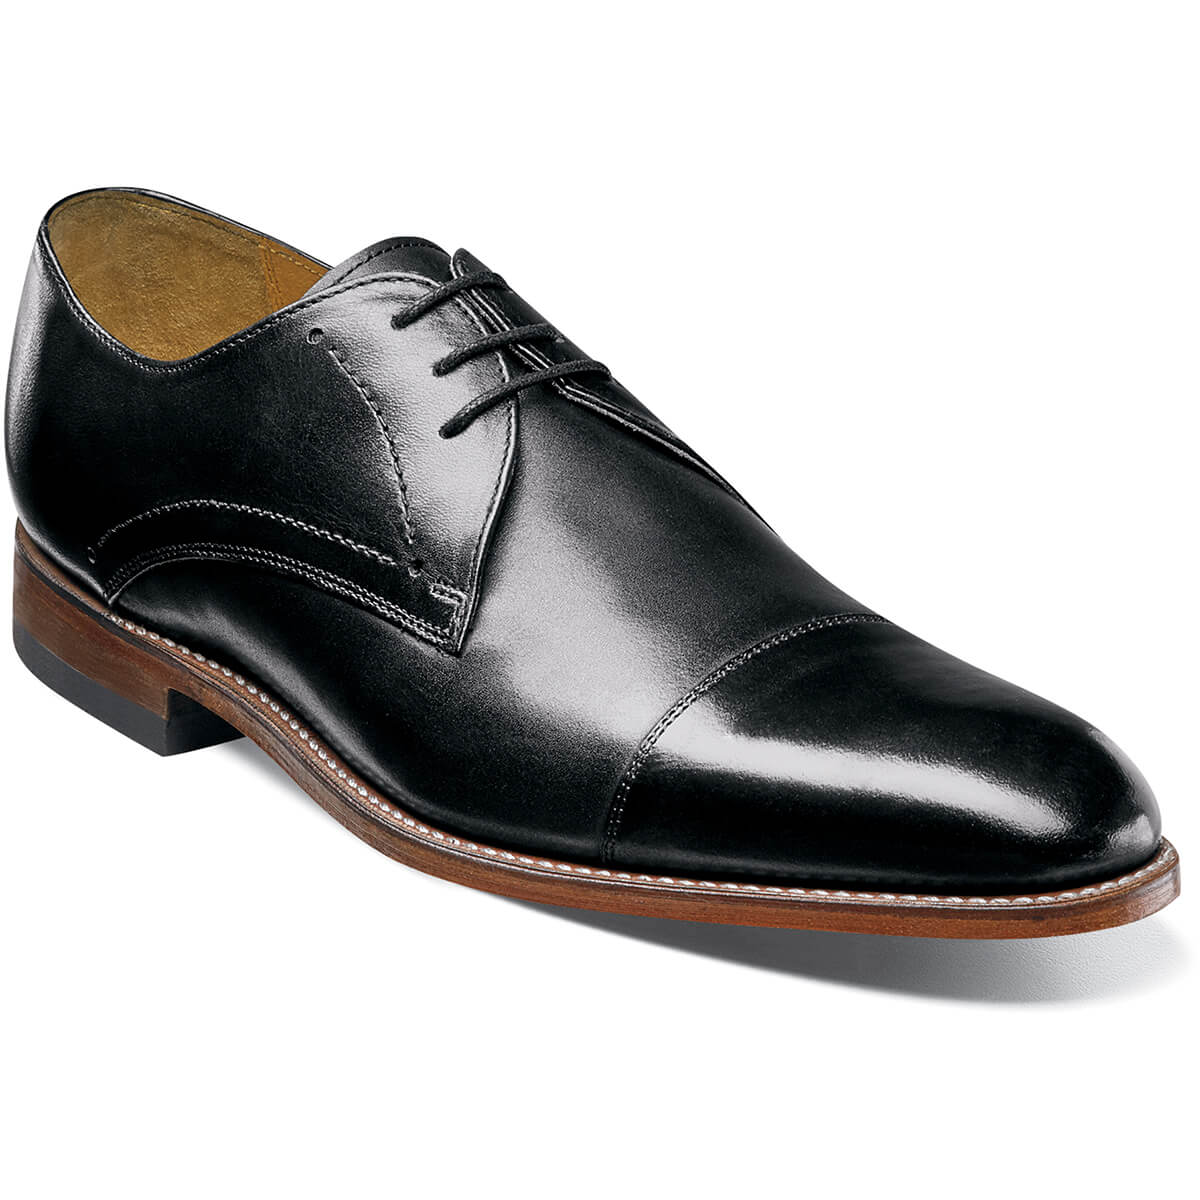 Men's Dress Shoes | Black Cap Toe Oxford | Stacy Adams Madison II